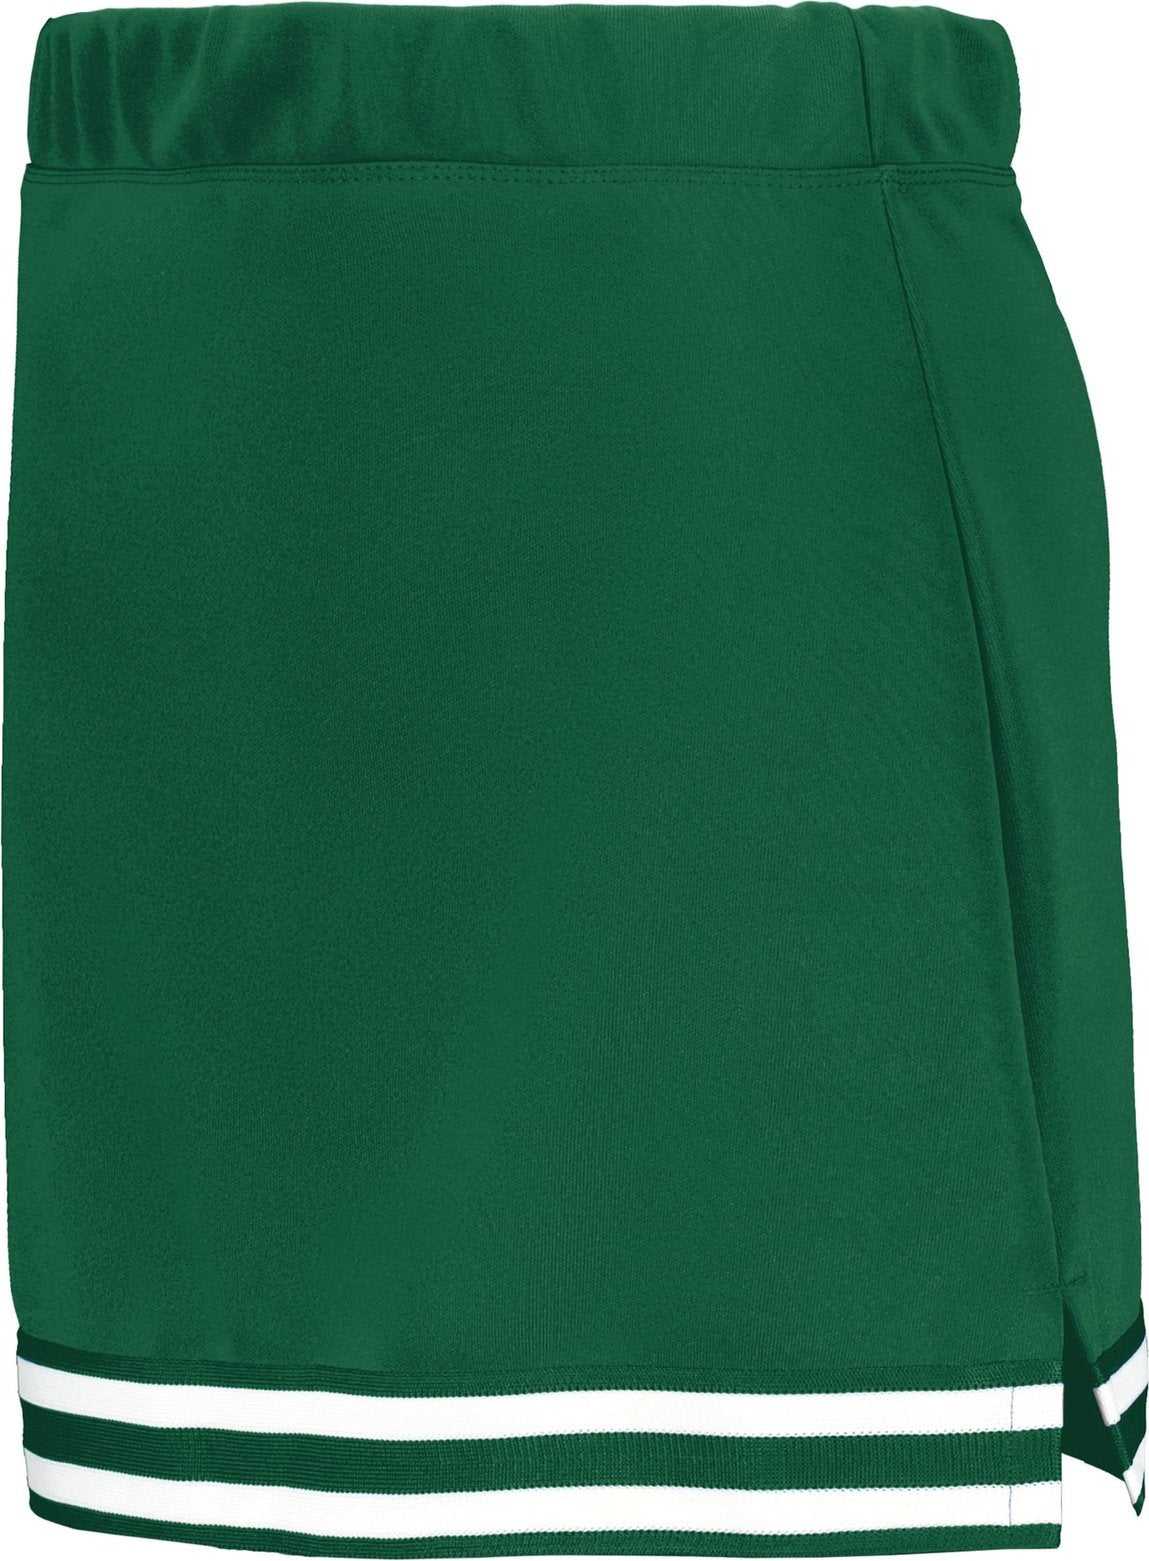 Augusta 6925 Ladies Cheer Squad Skirt - Dark Green Black White - HIT a Double